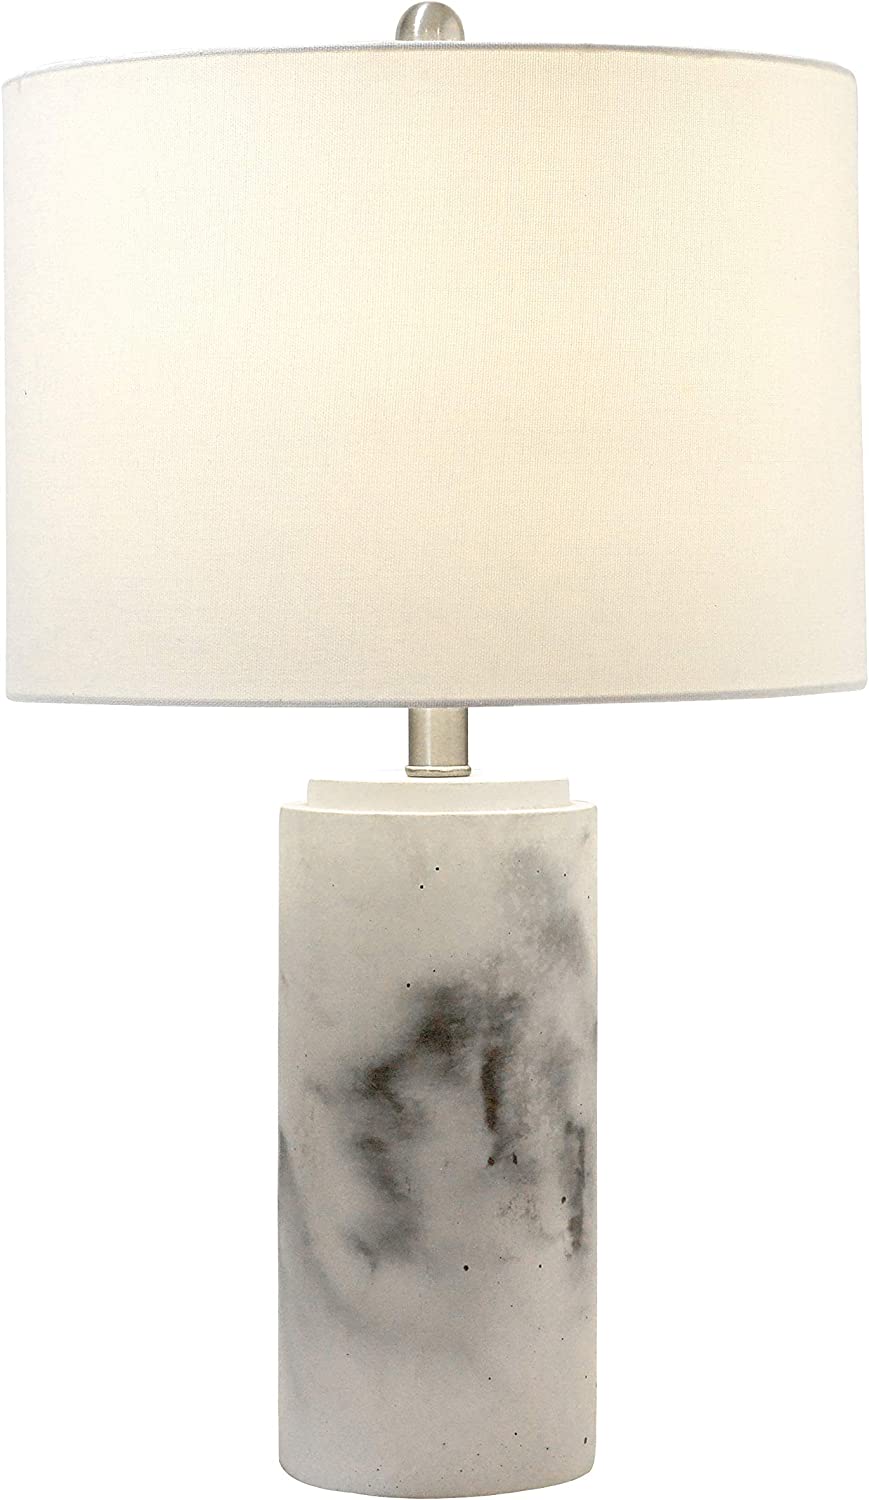 Elegant Designs LT3325-WHT Marble Fabric Shade Table Lamp, White